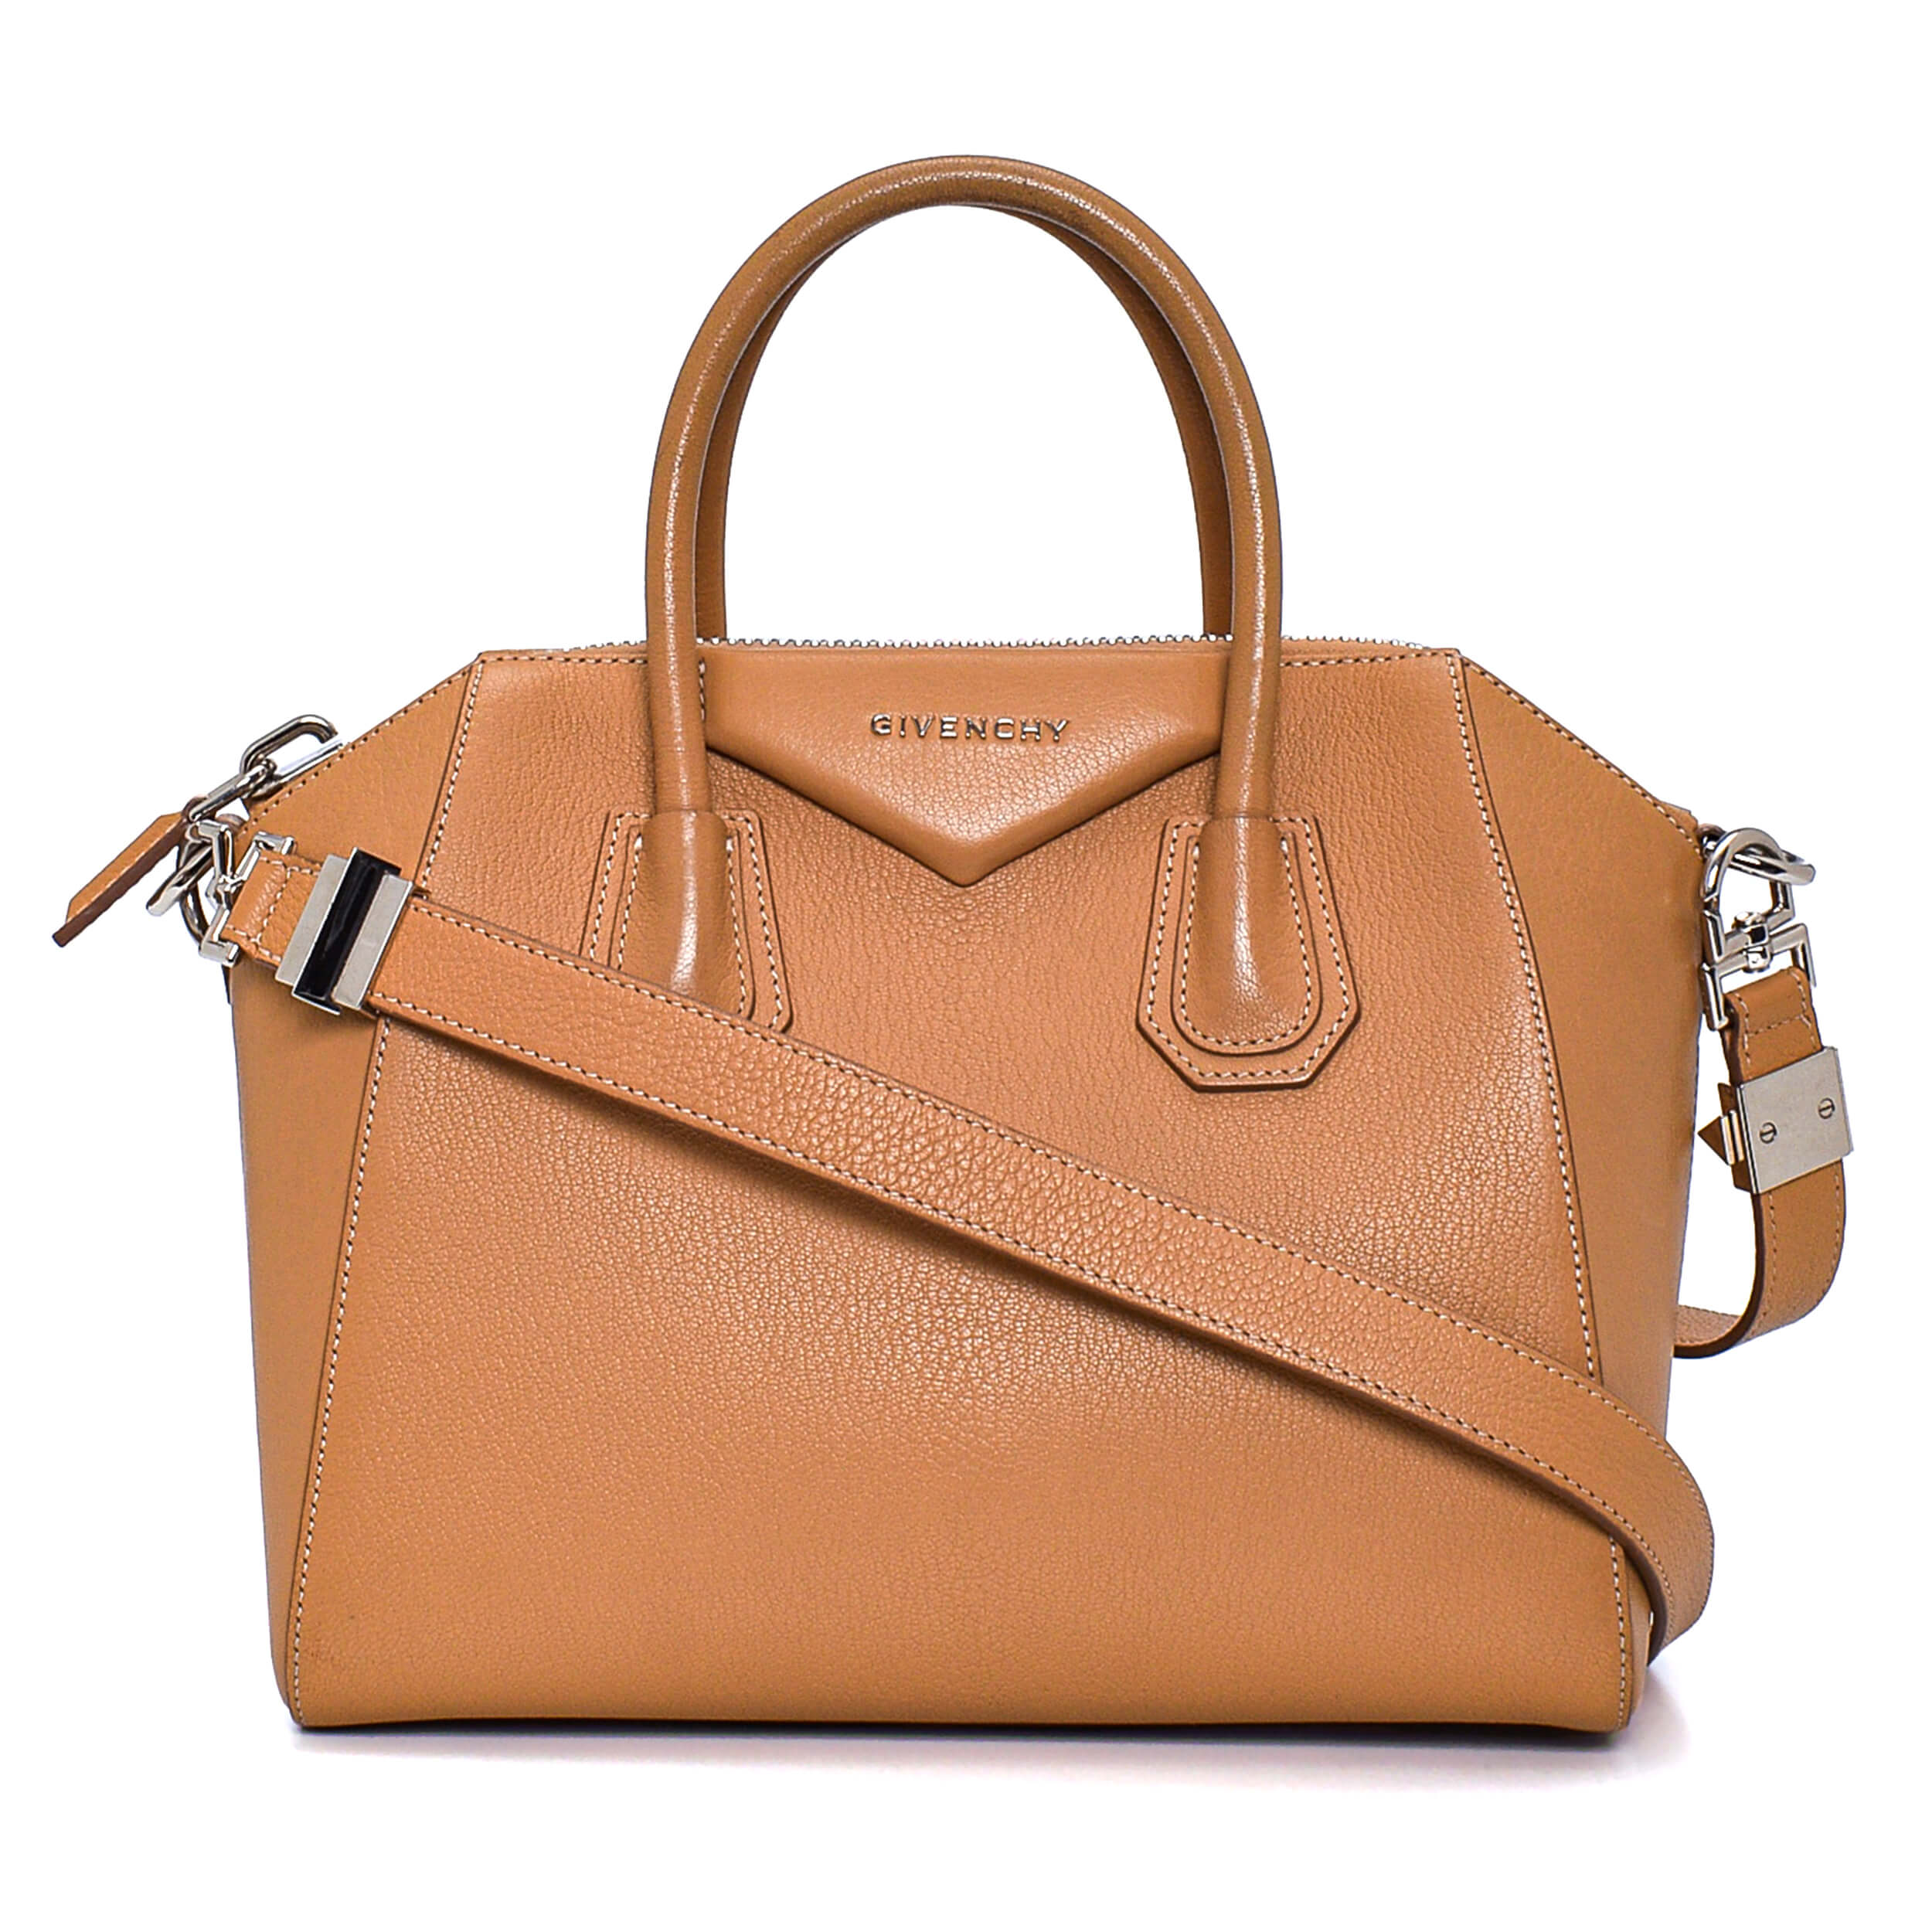 Givenchy - Beıge Leather Small Antıgona Bag